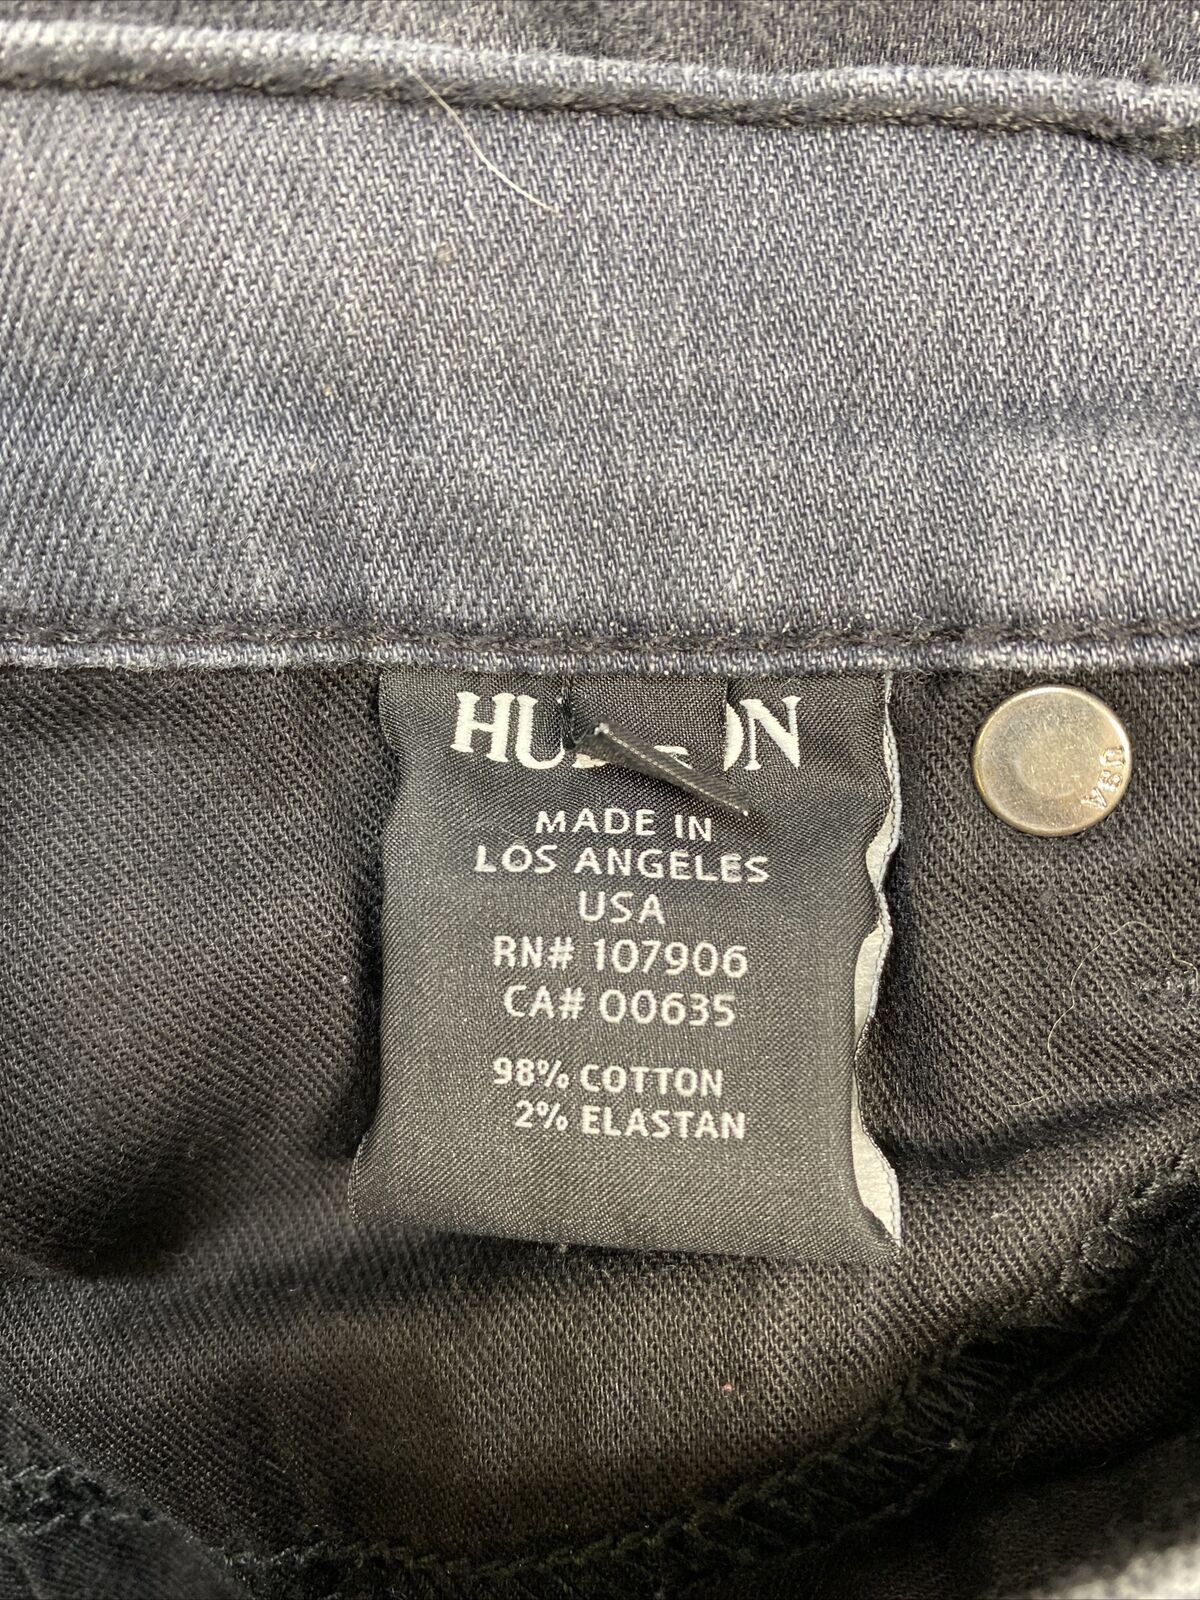 Hudson Women's Gray Nico Super Skinny Midrise Denim Jeans Sz 25